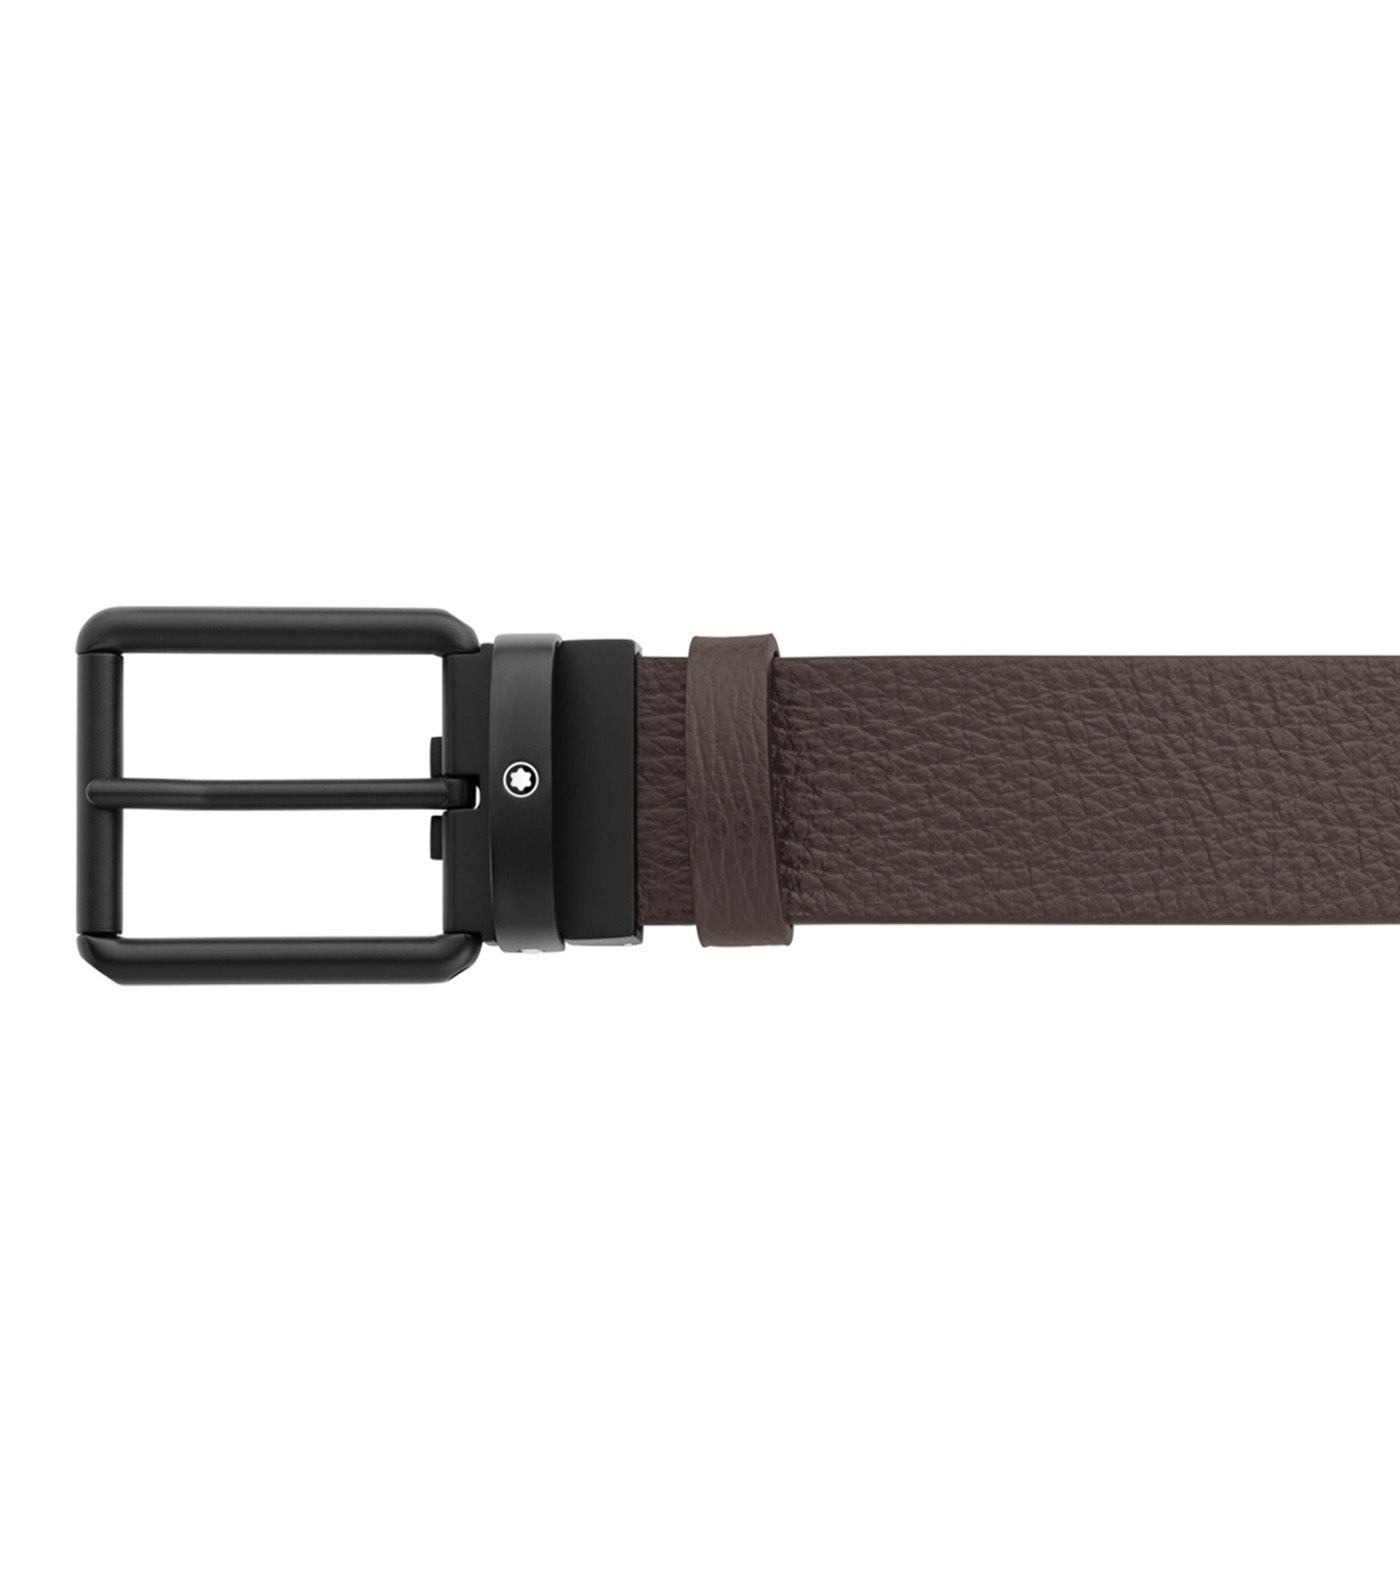 35mm Reversible Leather Belt Brown/Black